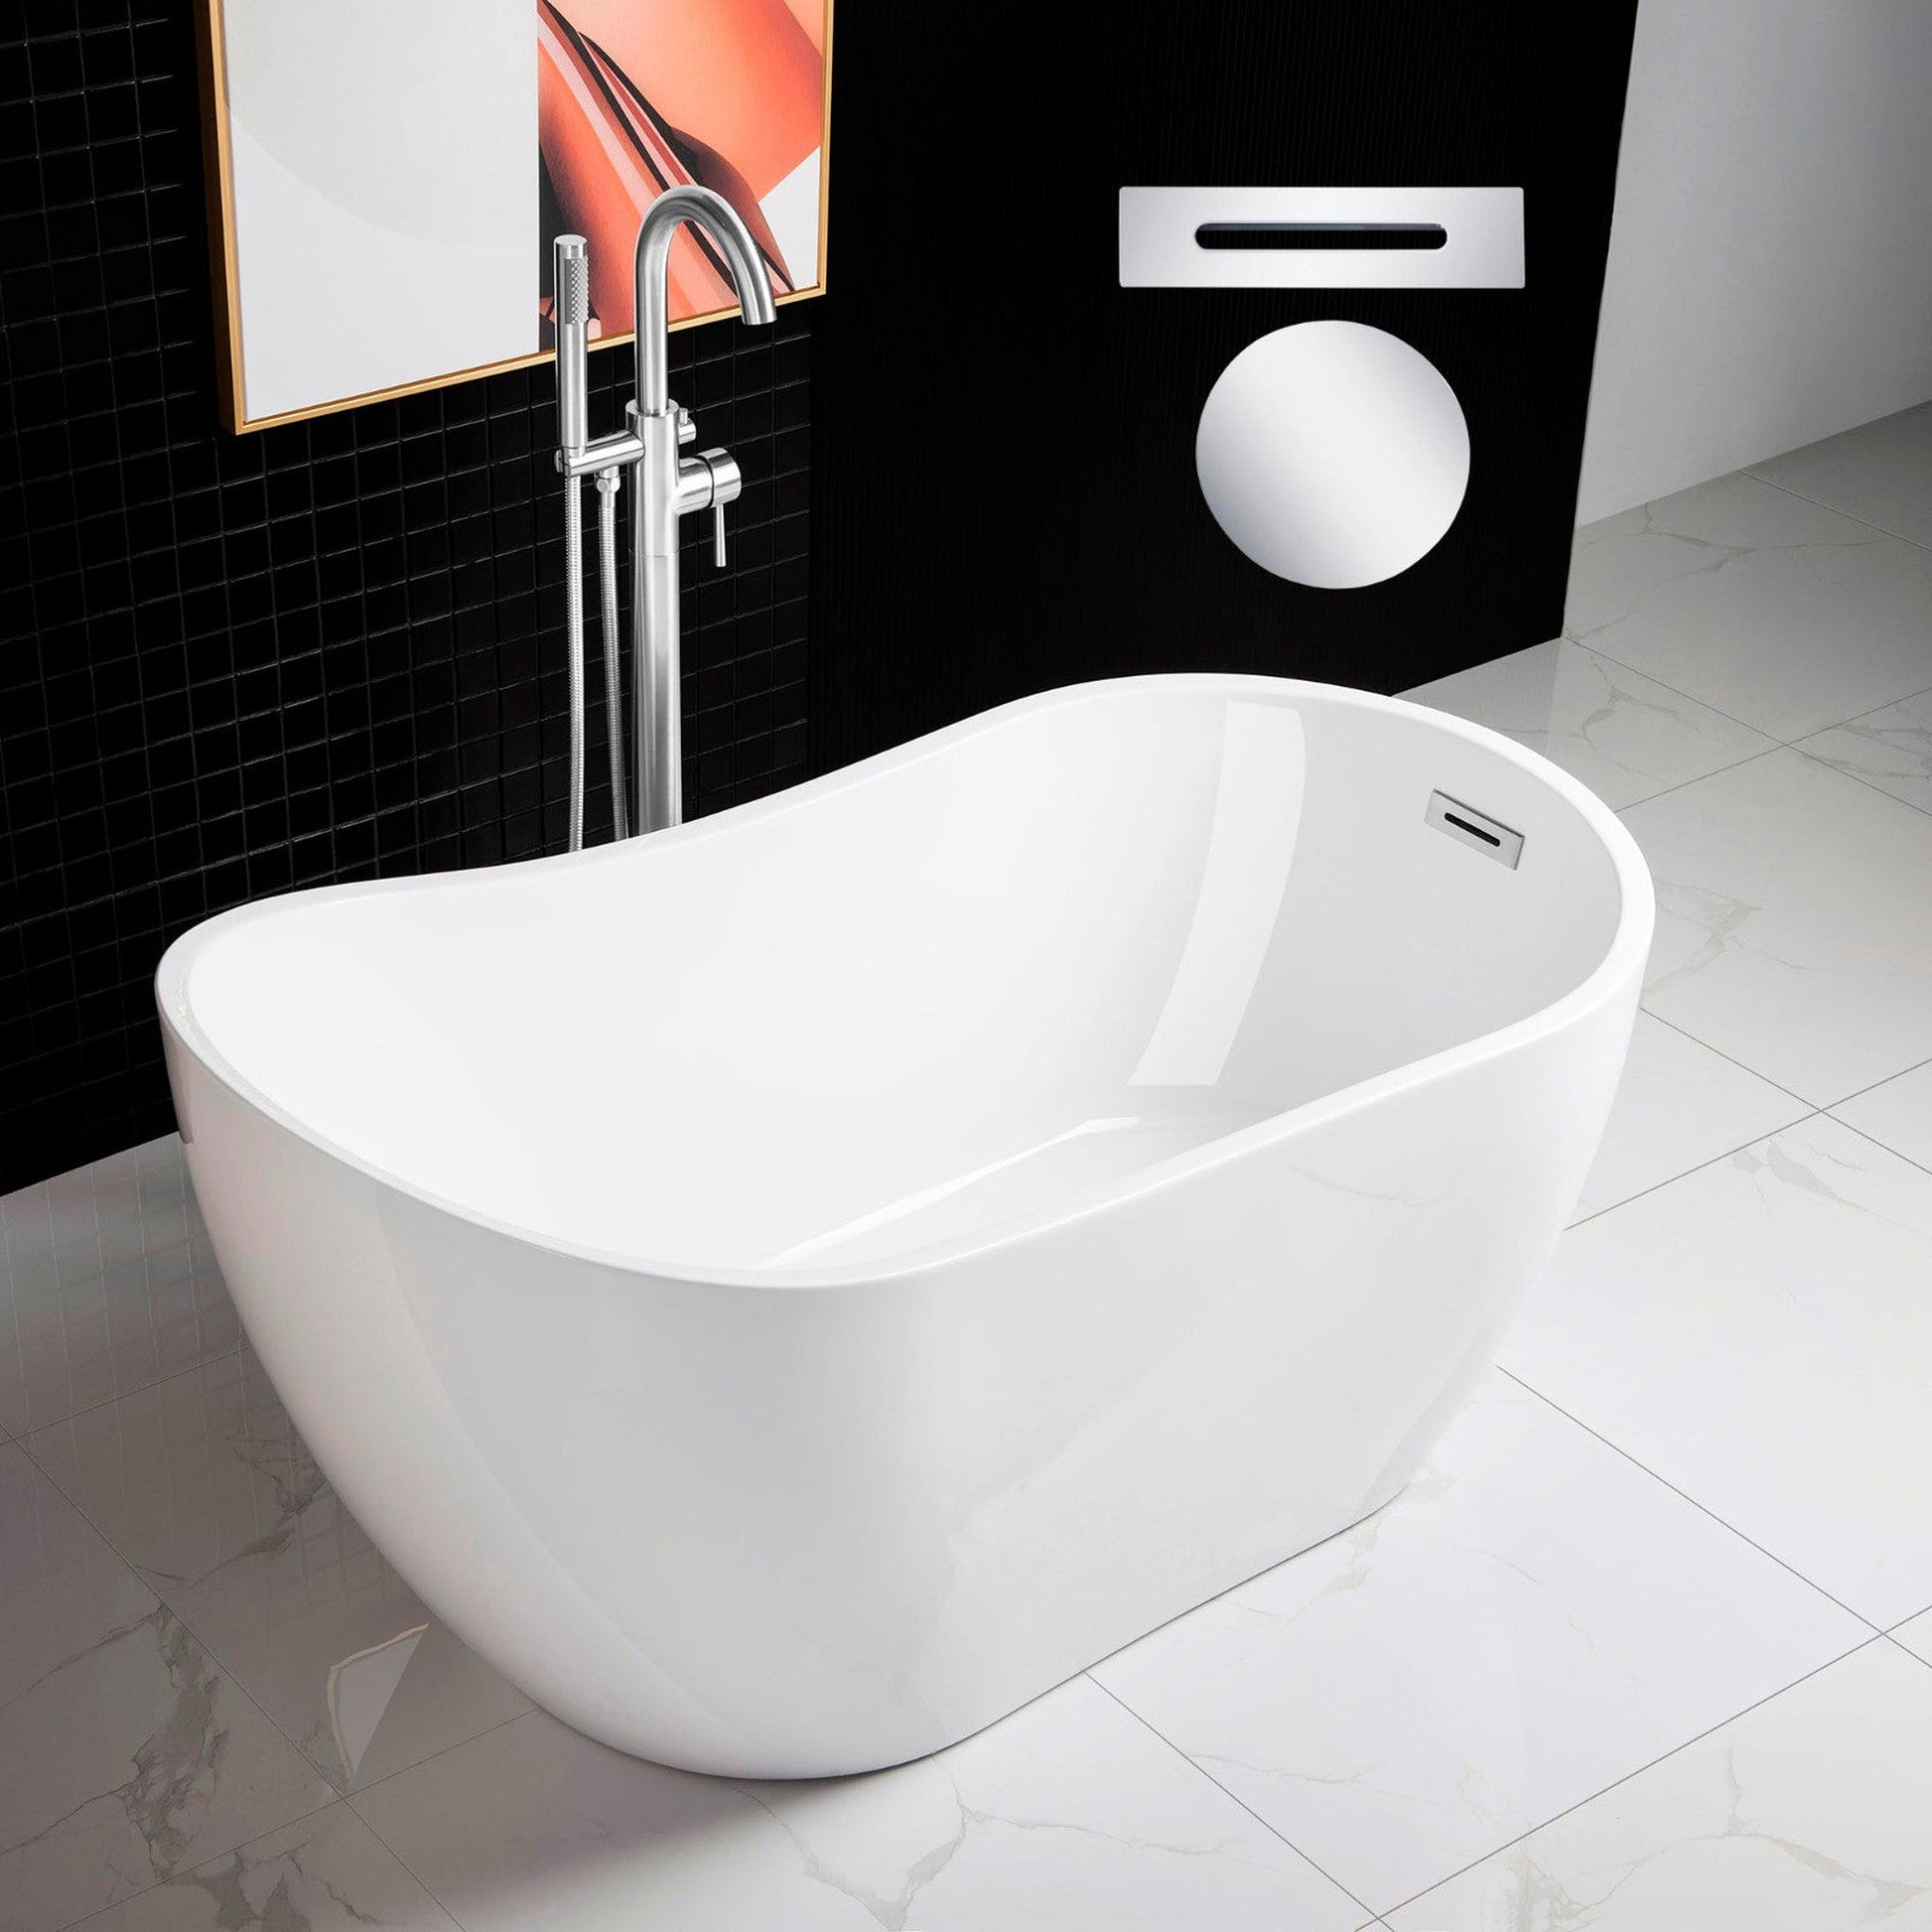 WoodBridge 54" White Acrylic Freestanding Soaking Bathtub With Chrome Drain, Overflow, F0071CHRD Tub Filler and Caddy Tray